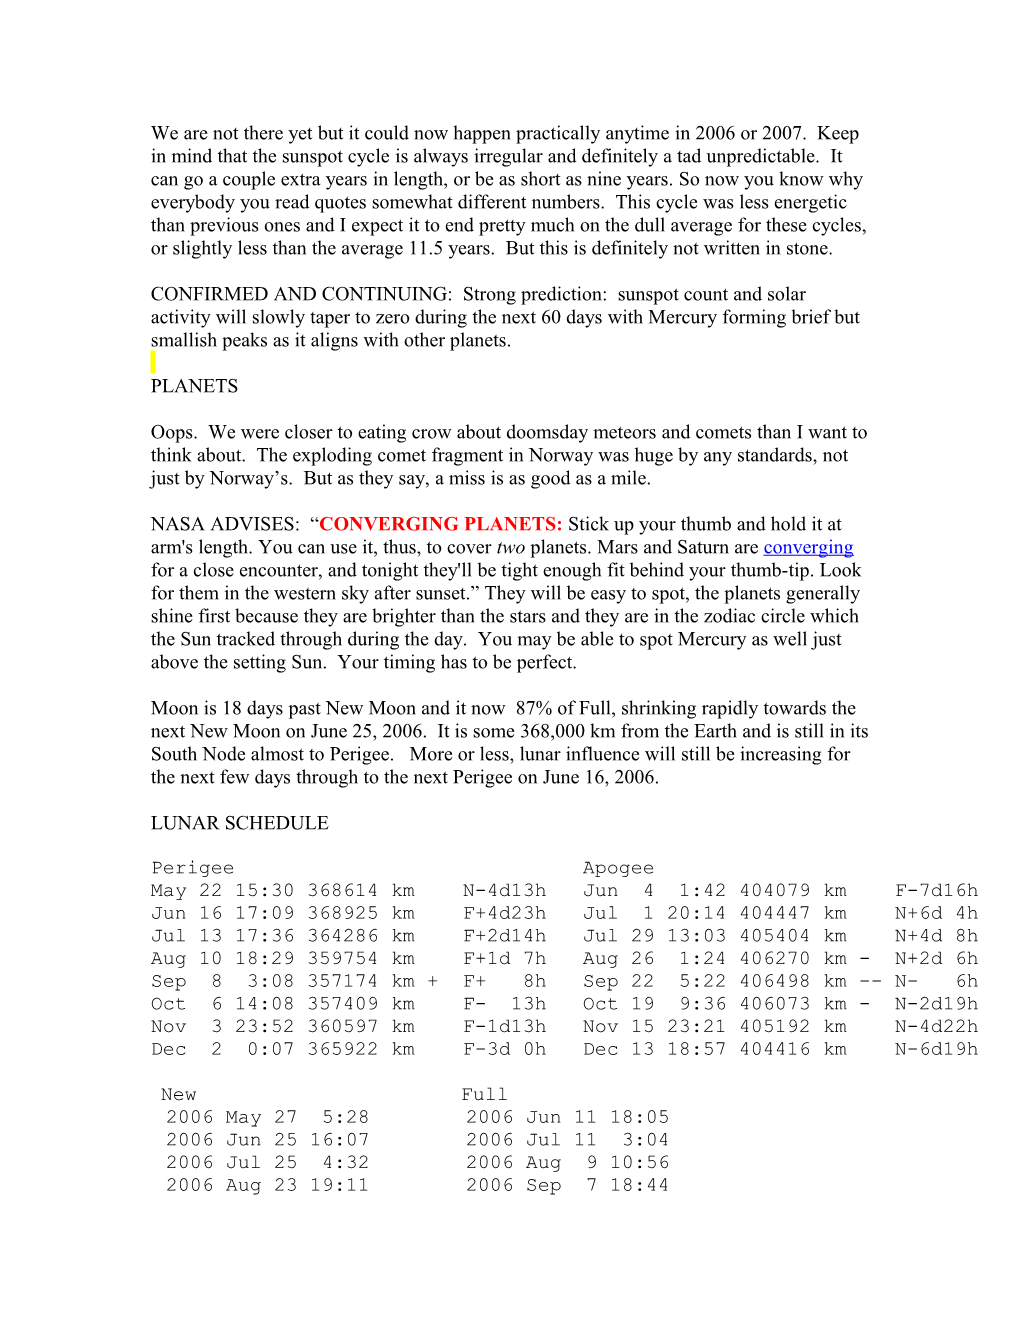 BULLETIN ITEM: Earth Changes Bulletin Update As of June 14 2006